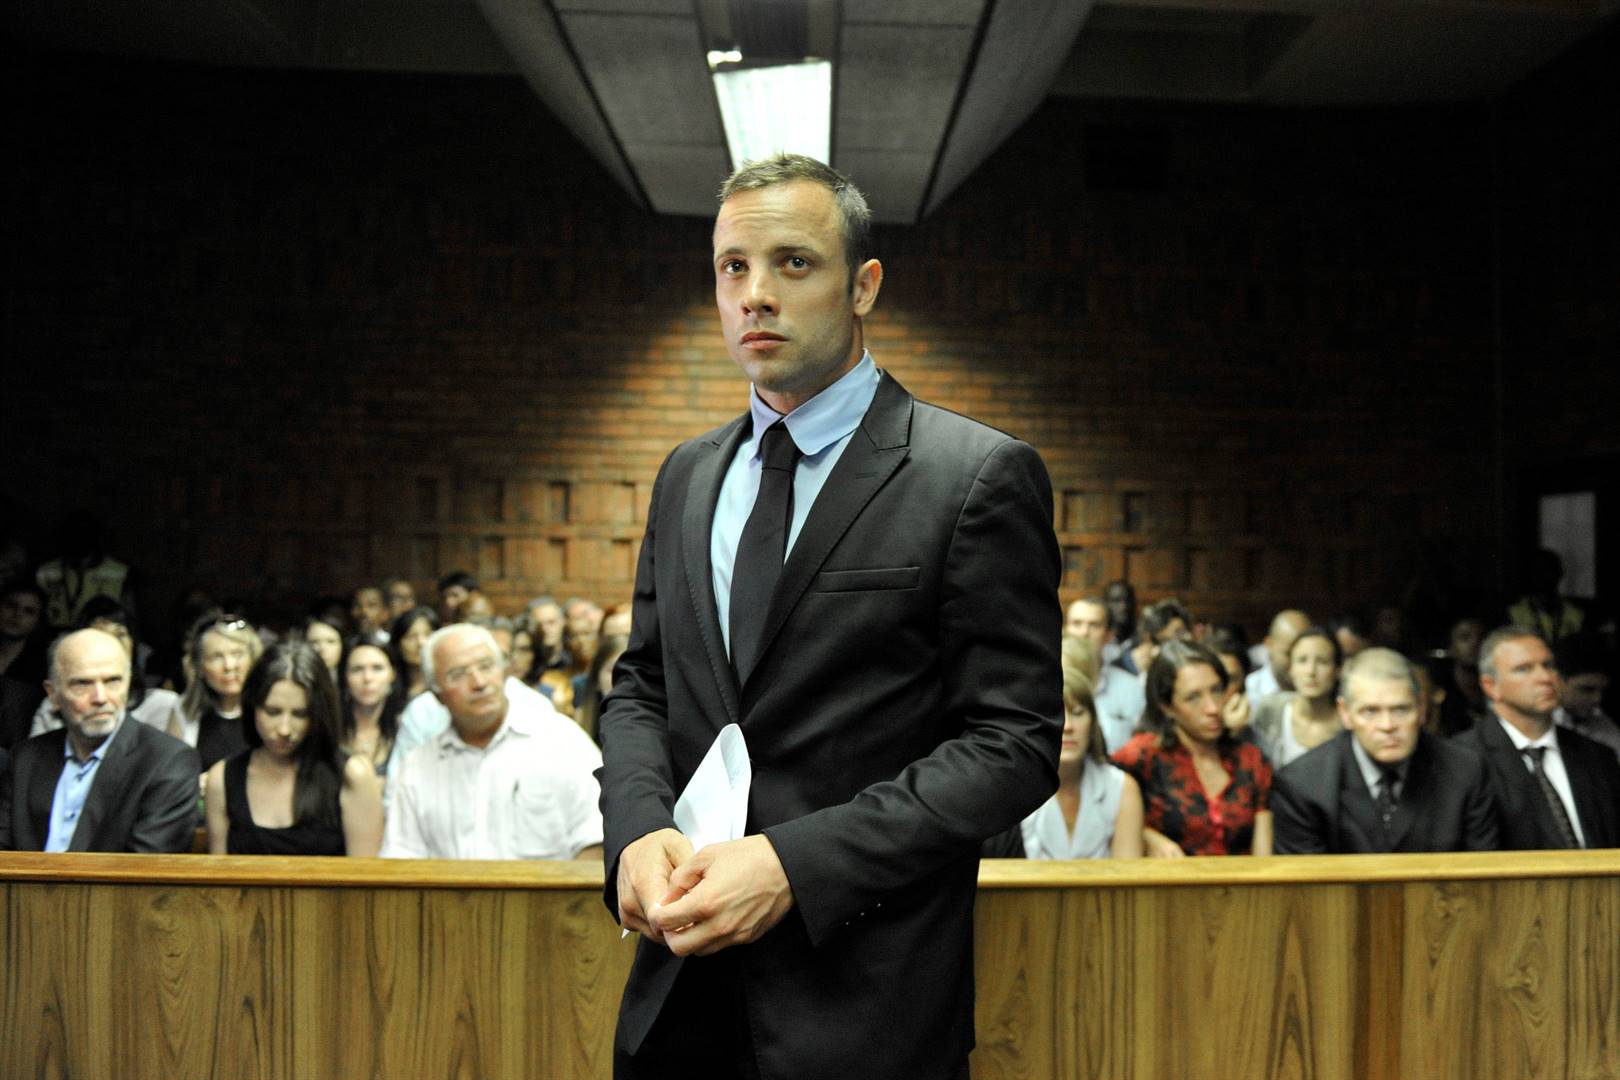 Die veroordeelde moordenaar Oscar Pistorius. Foto: Argief